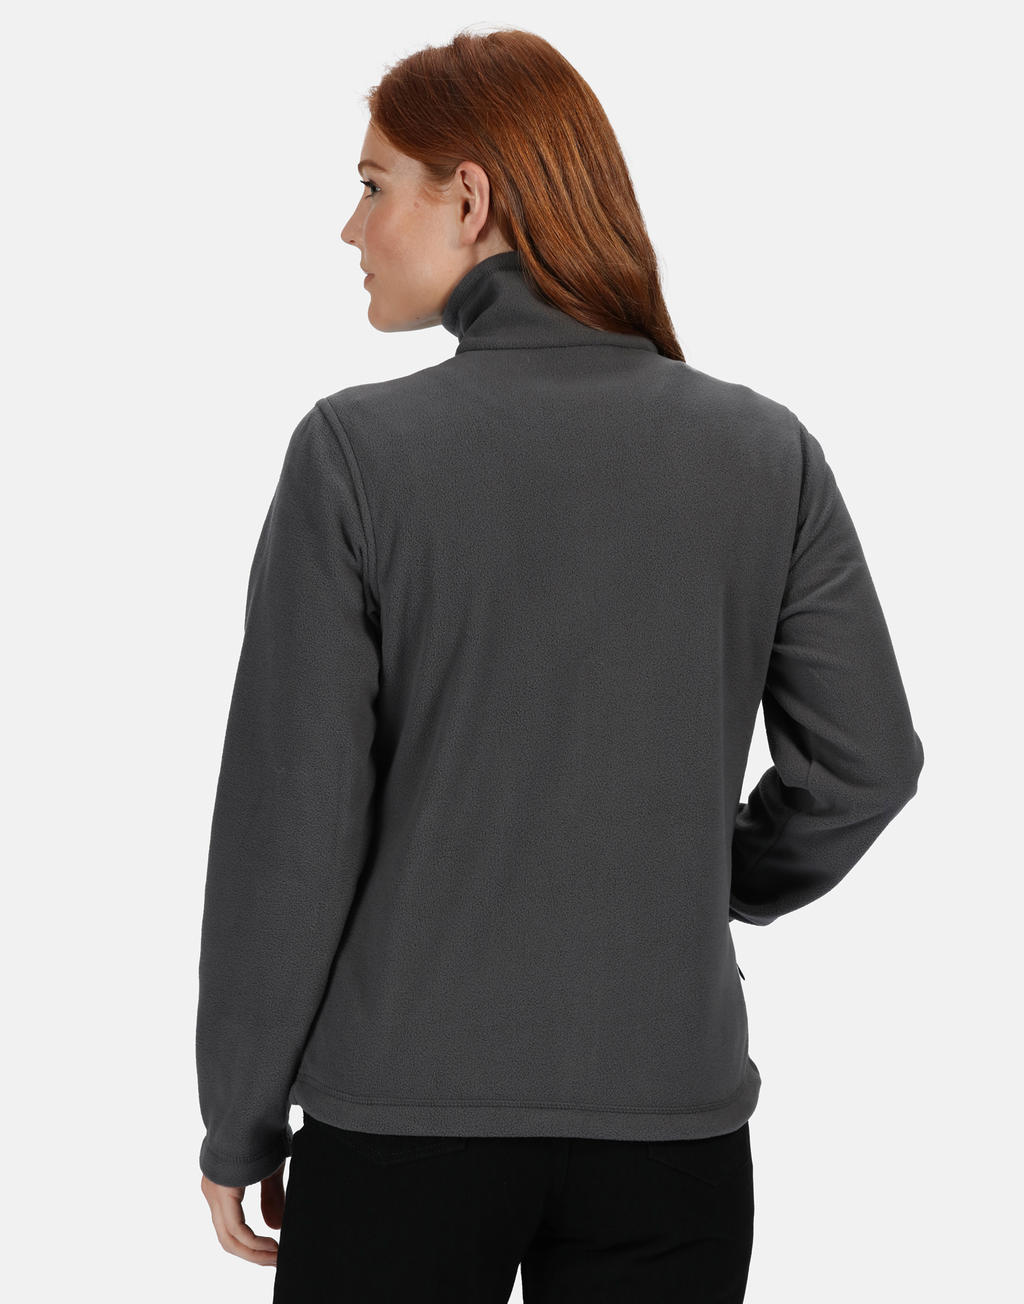  Womens Micro Full Zip Fleece in Farbe Black